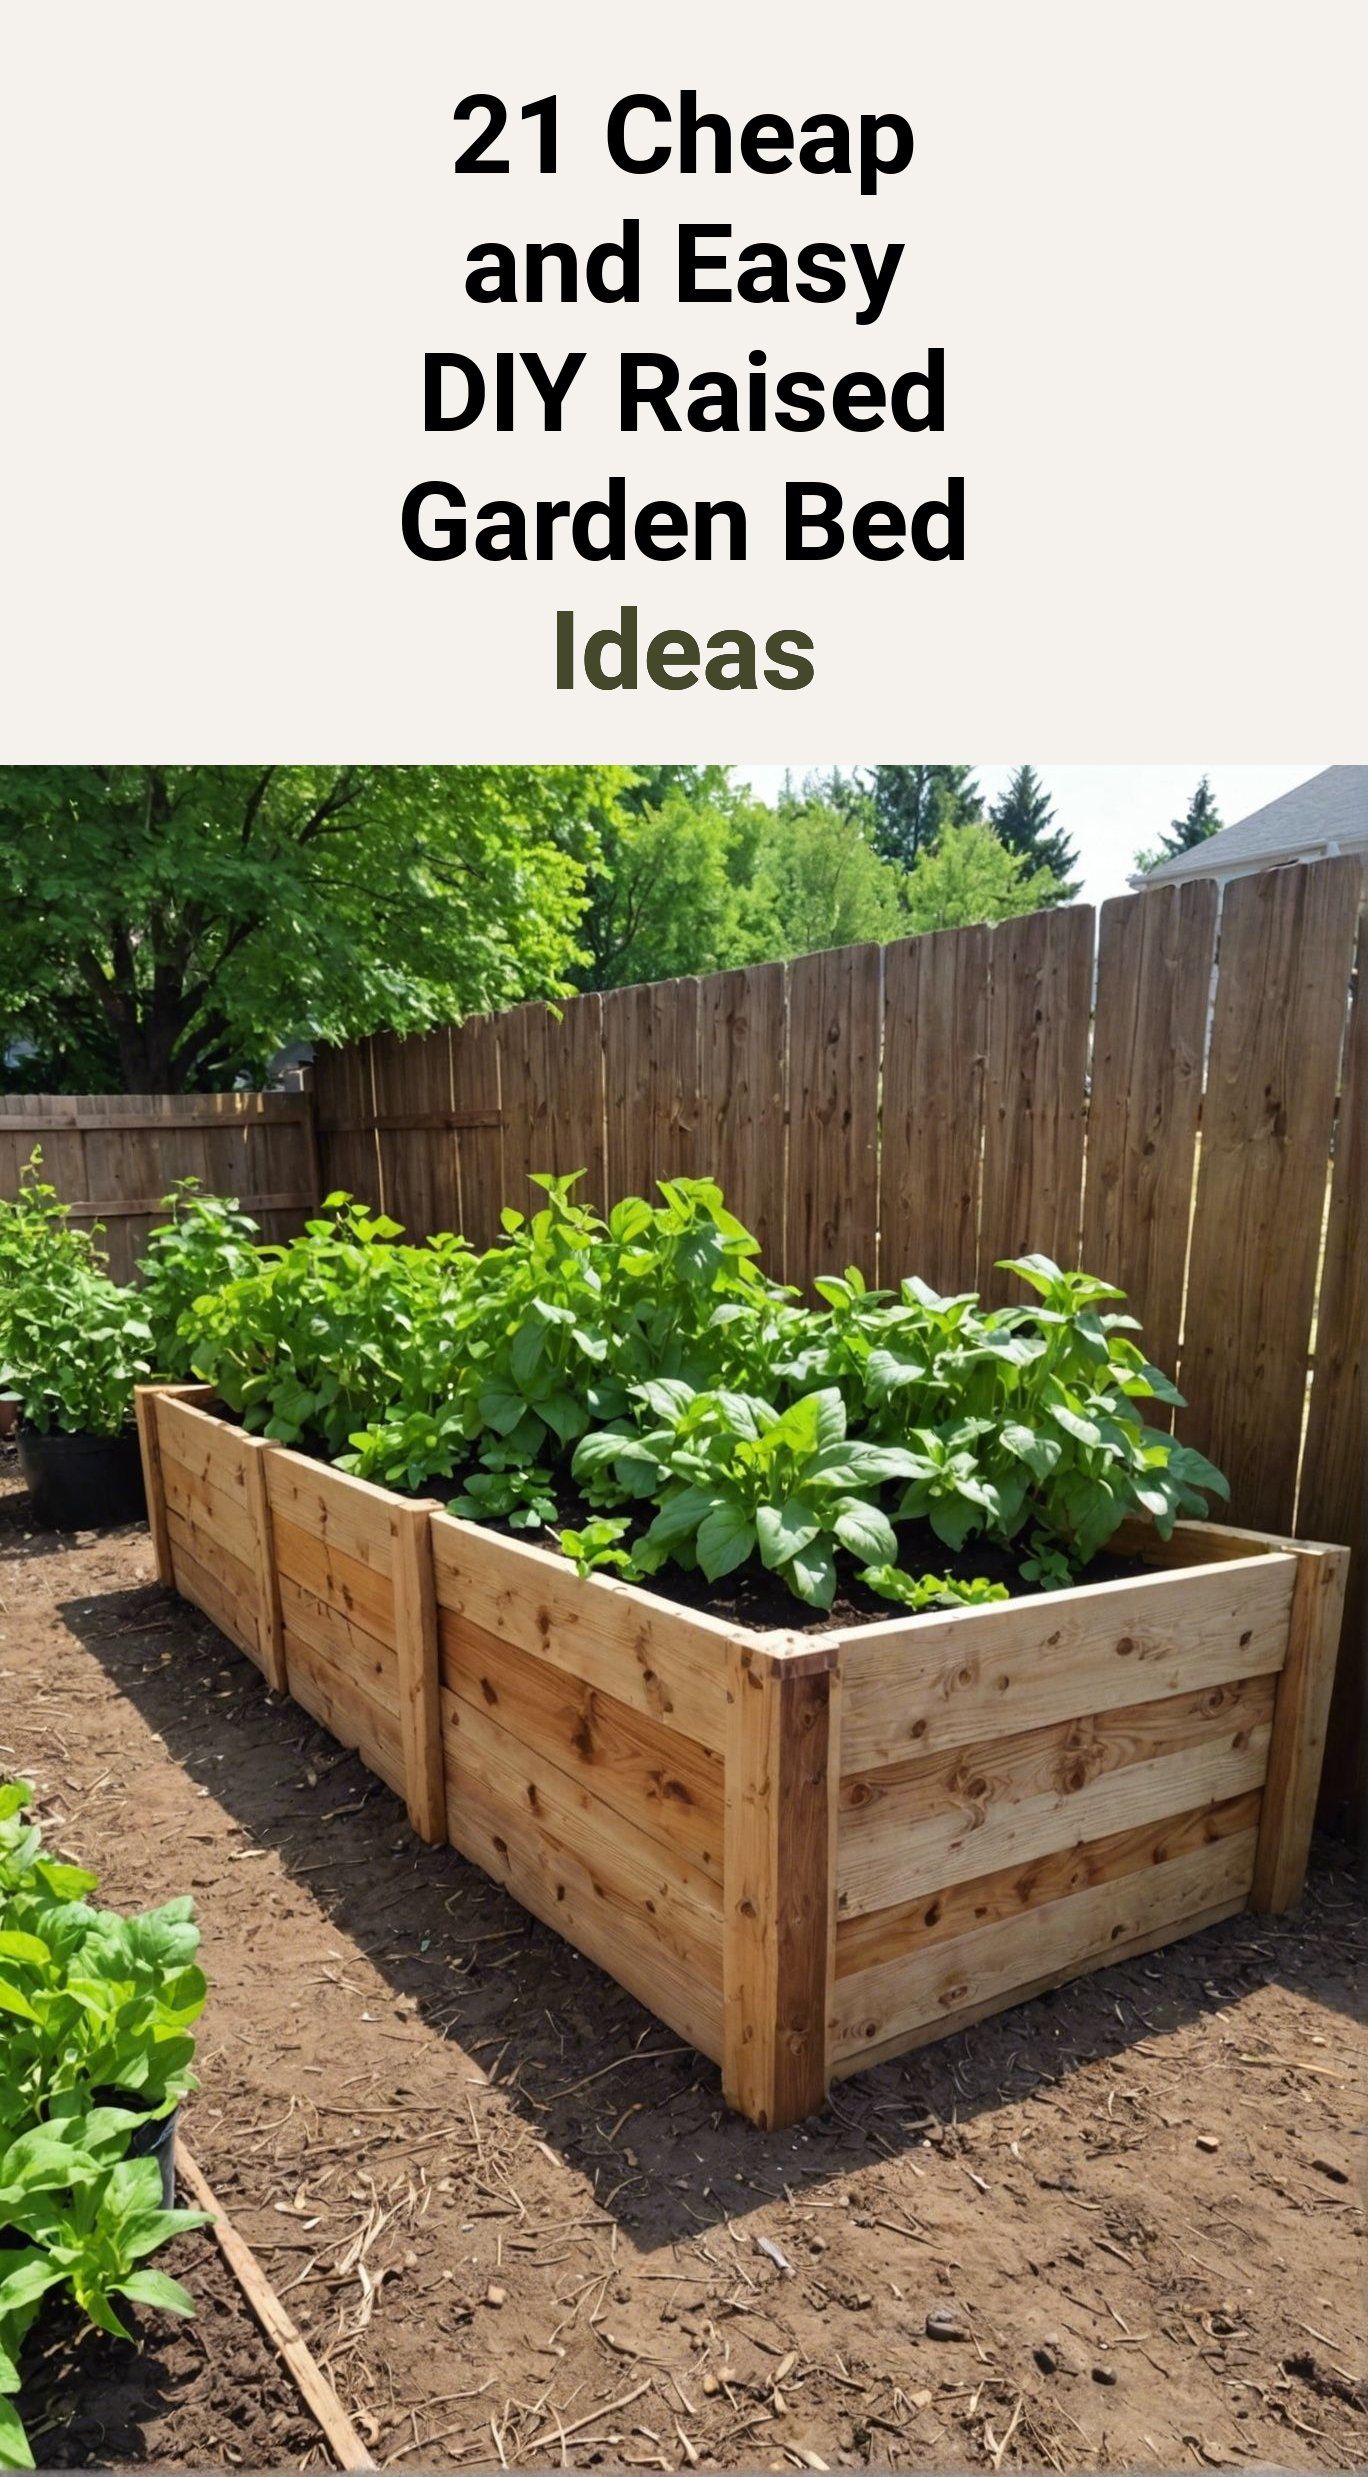 21 Cheap and Easy DIY Raised Garden Bed Ideas